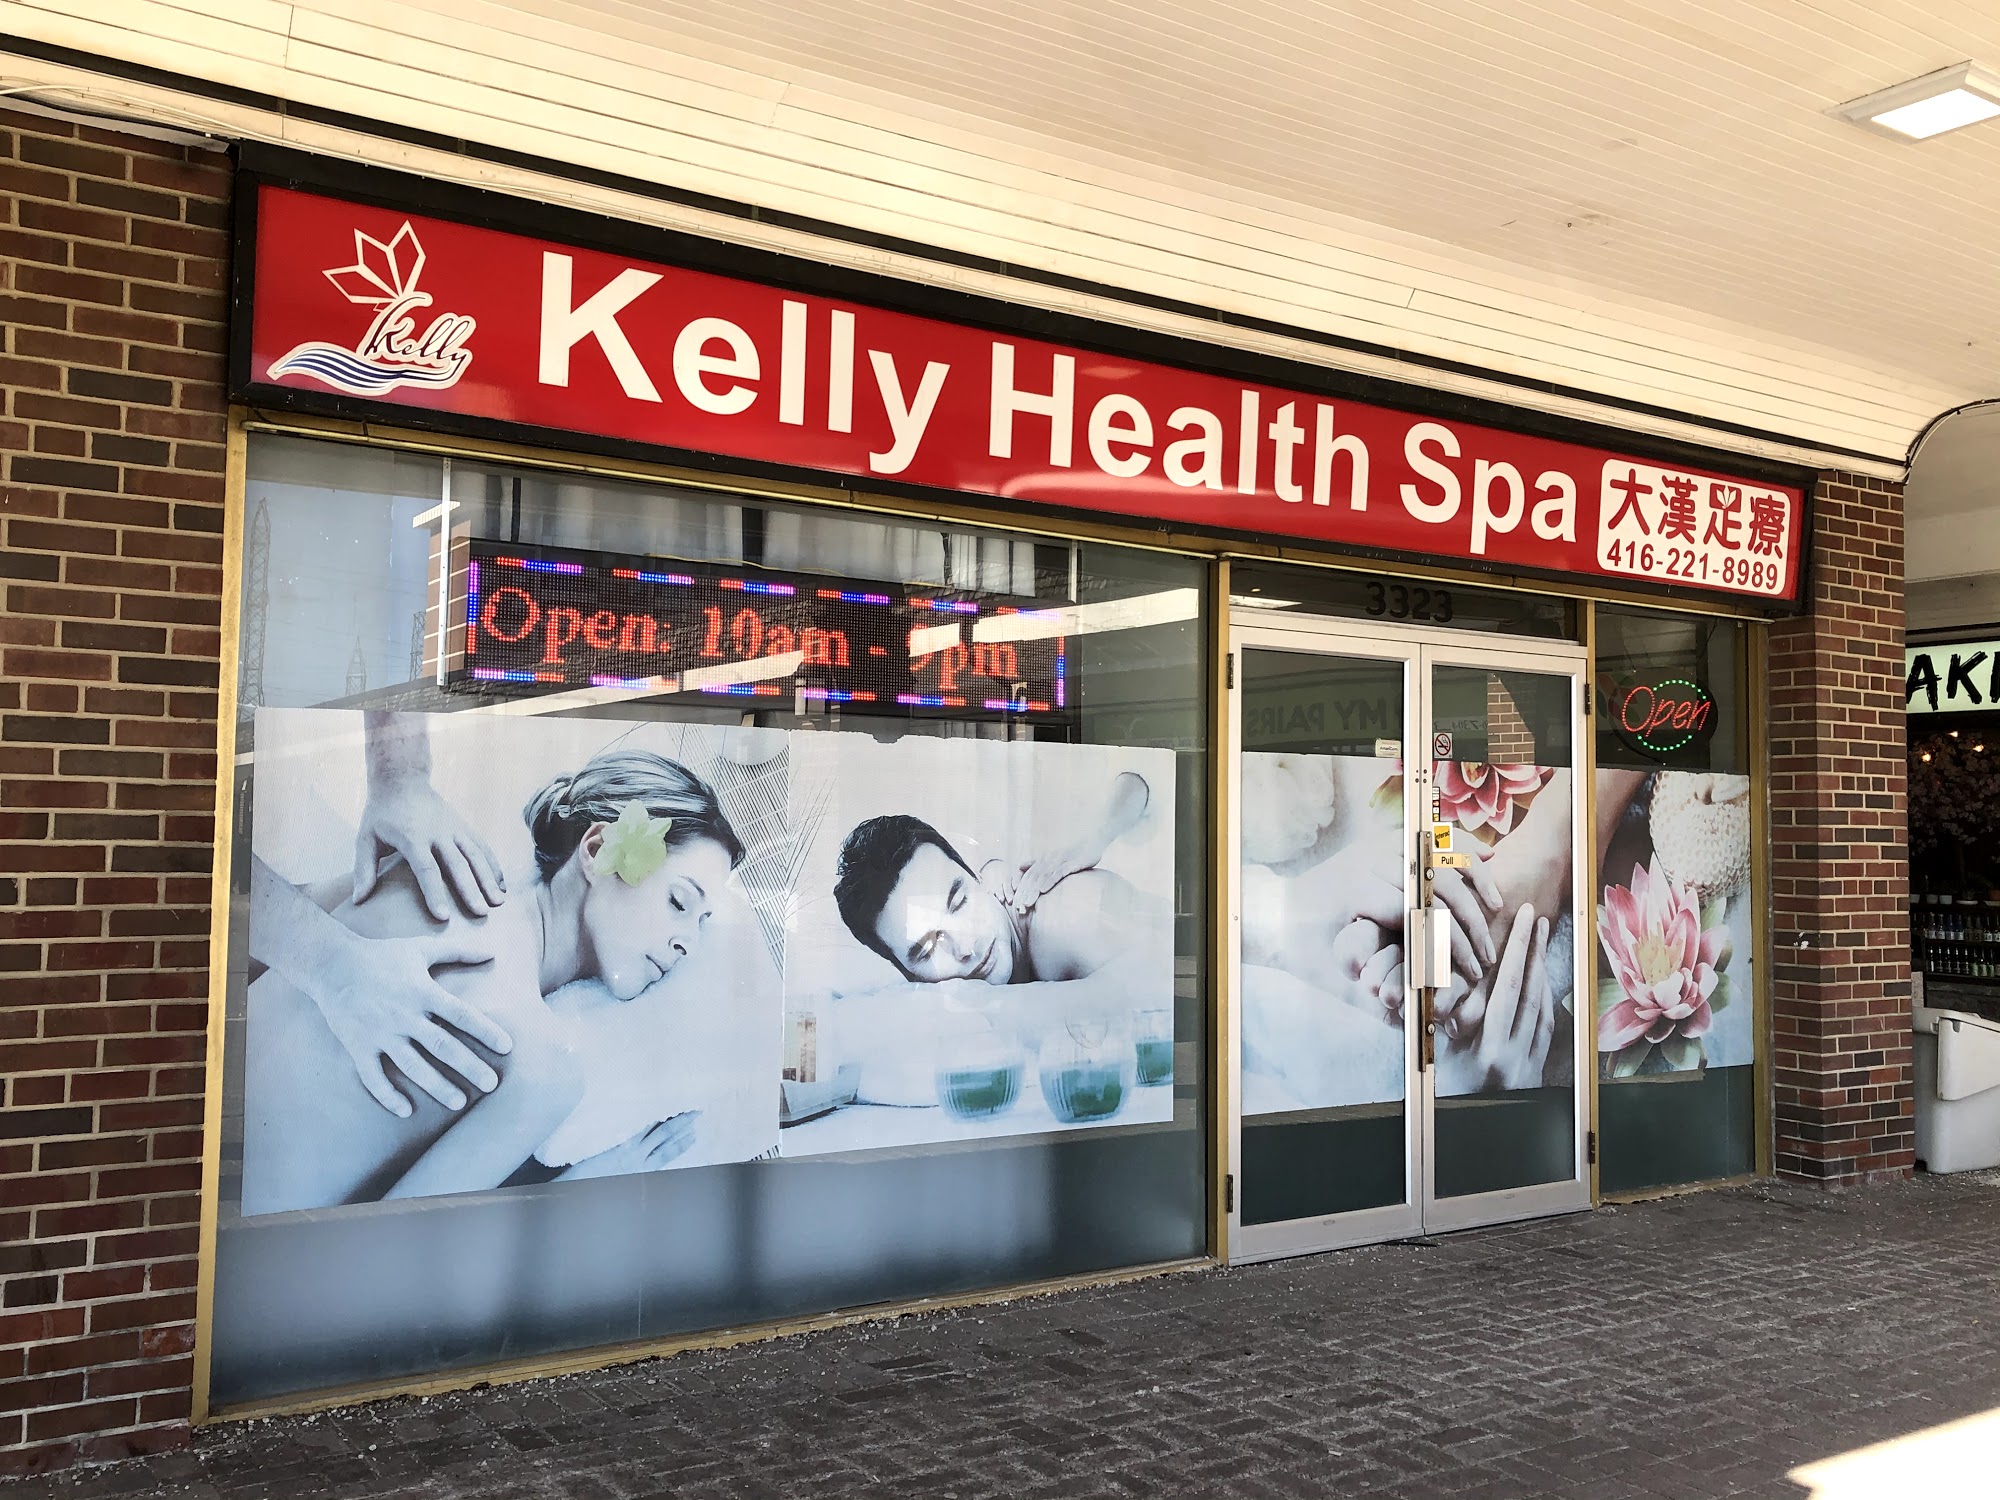 Kelly Health Spa